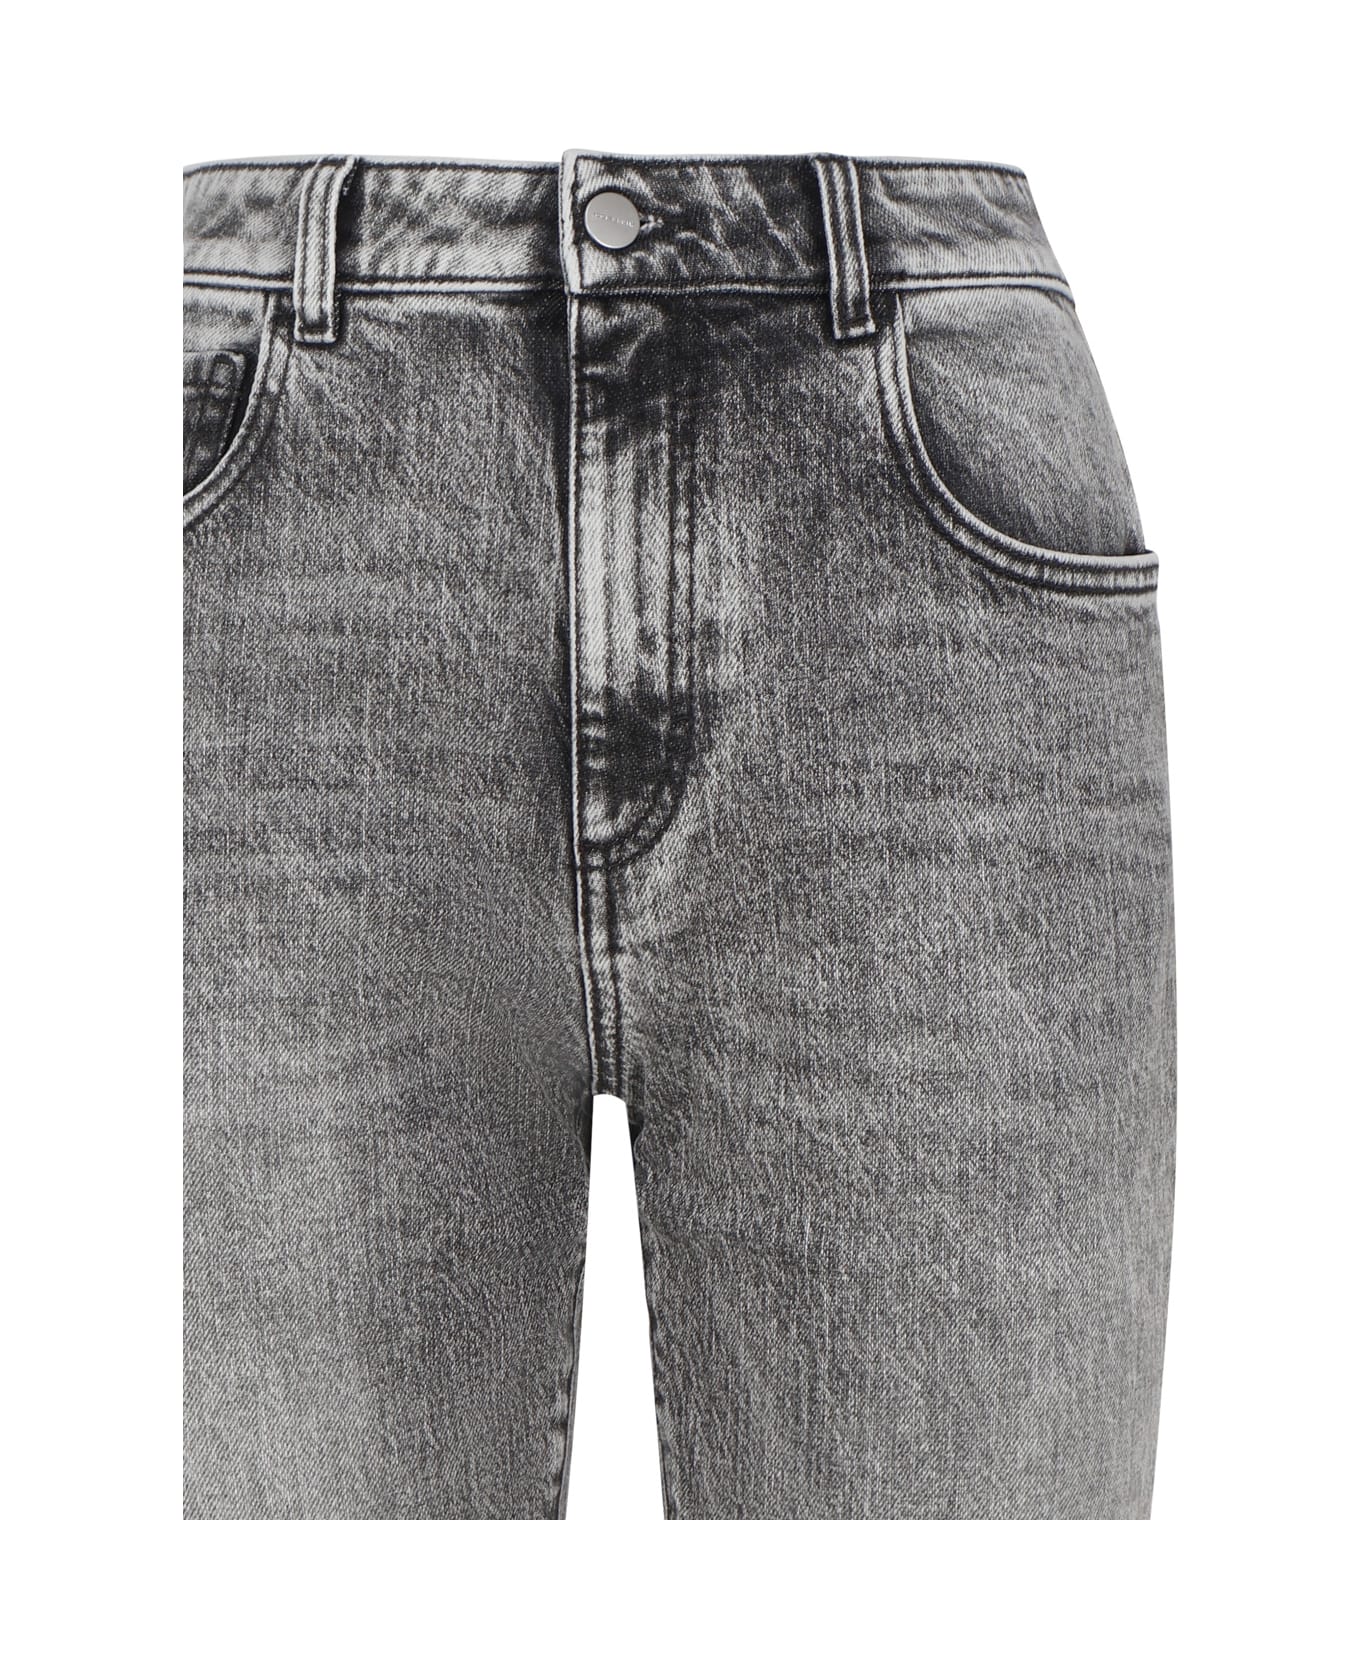 Icon Denim Vintage Effect Jeans - Grey